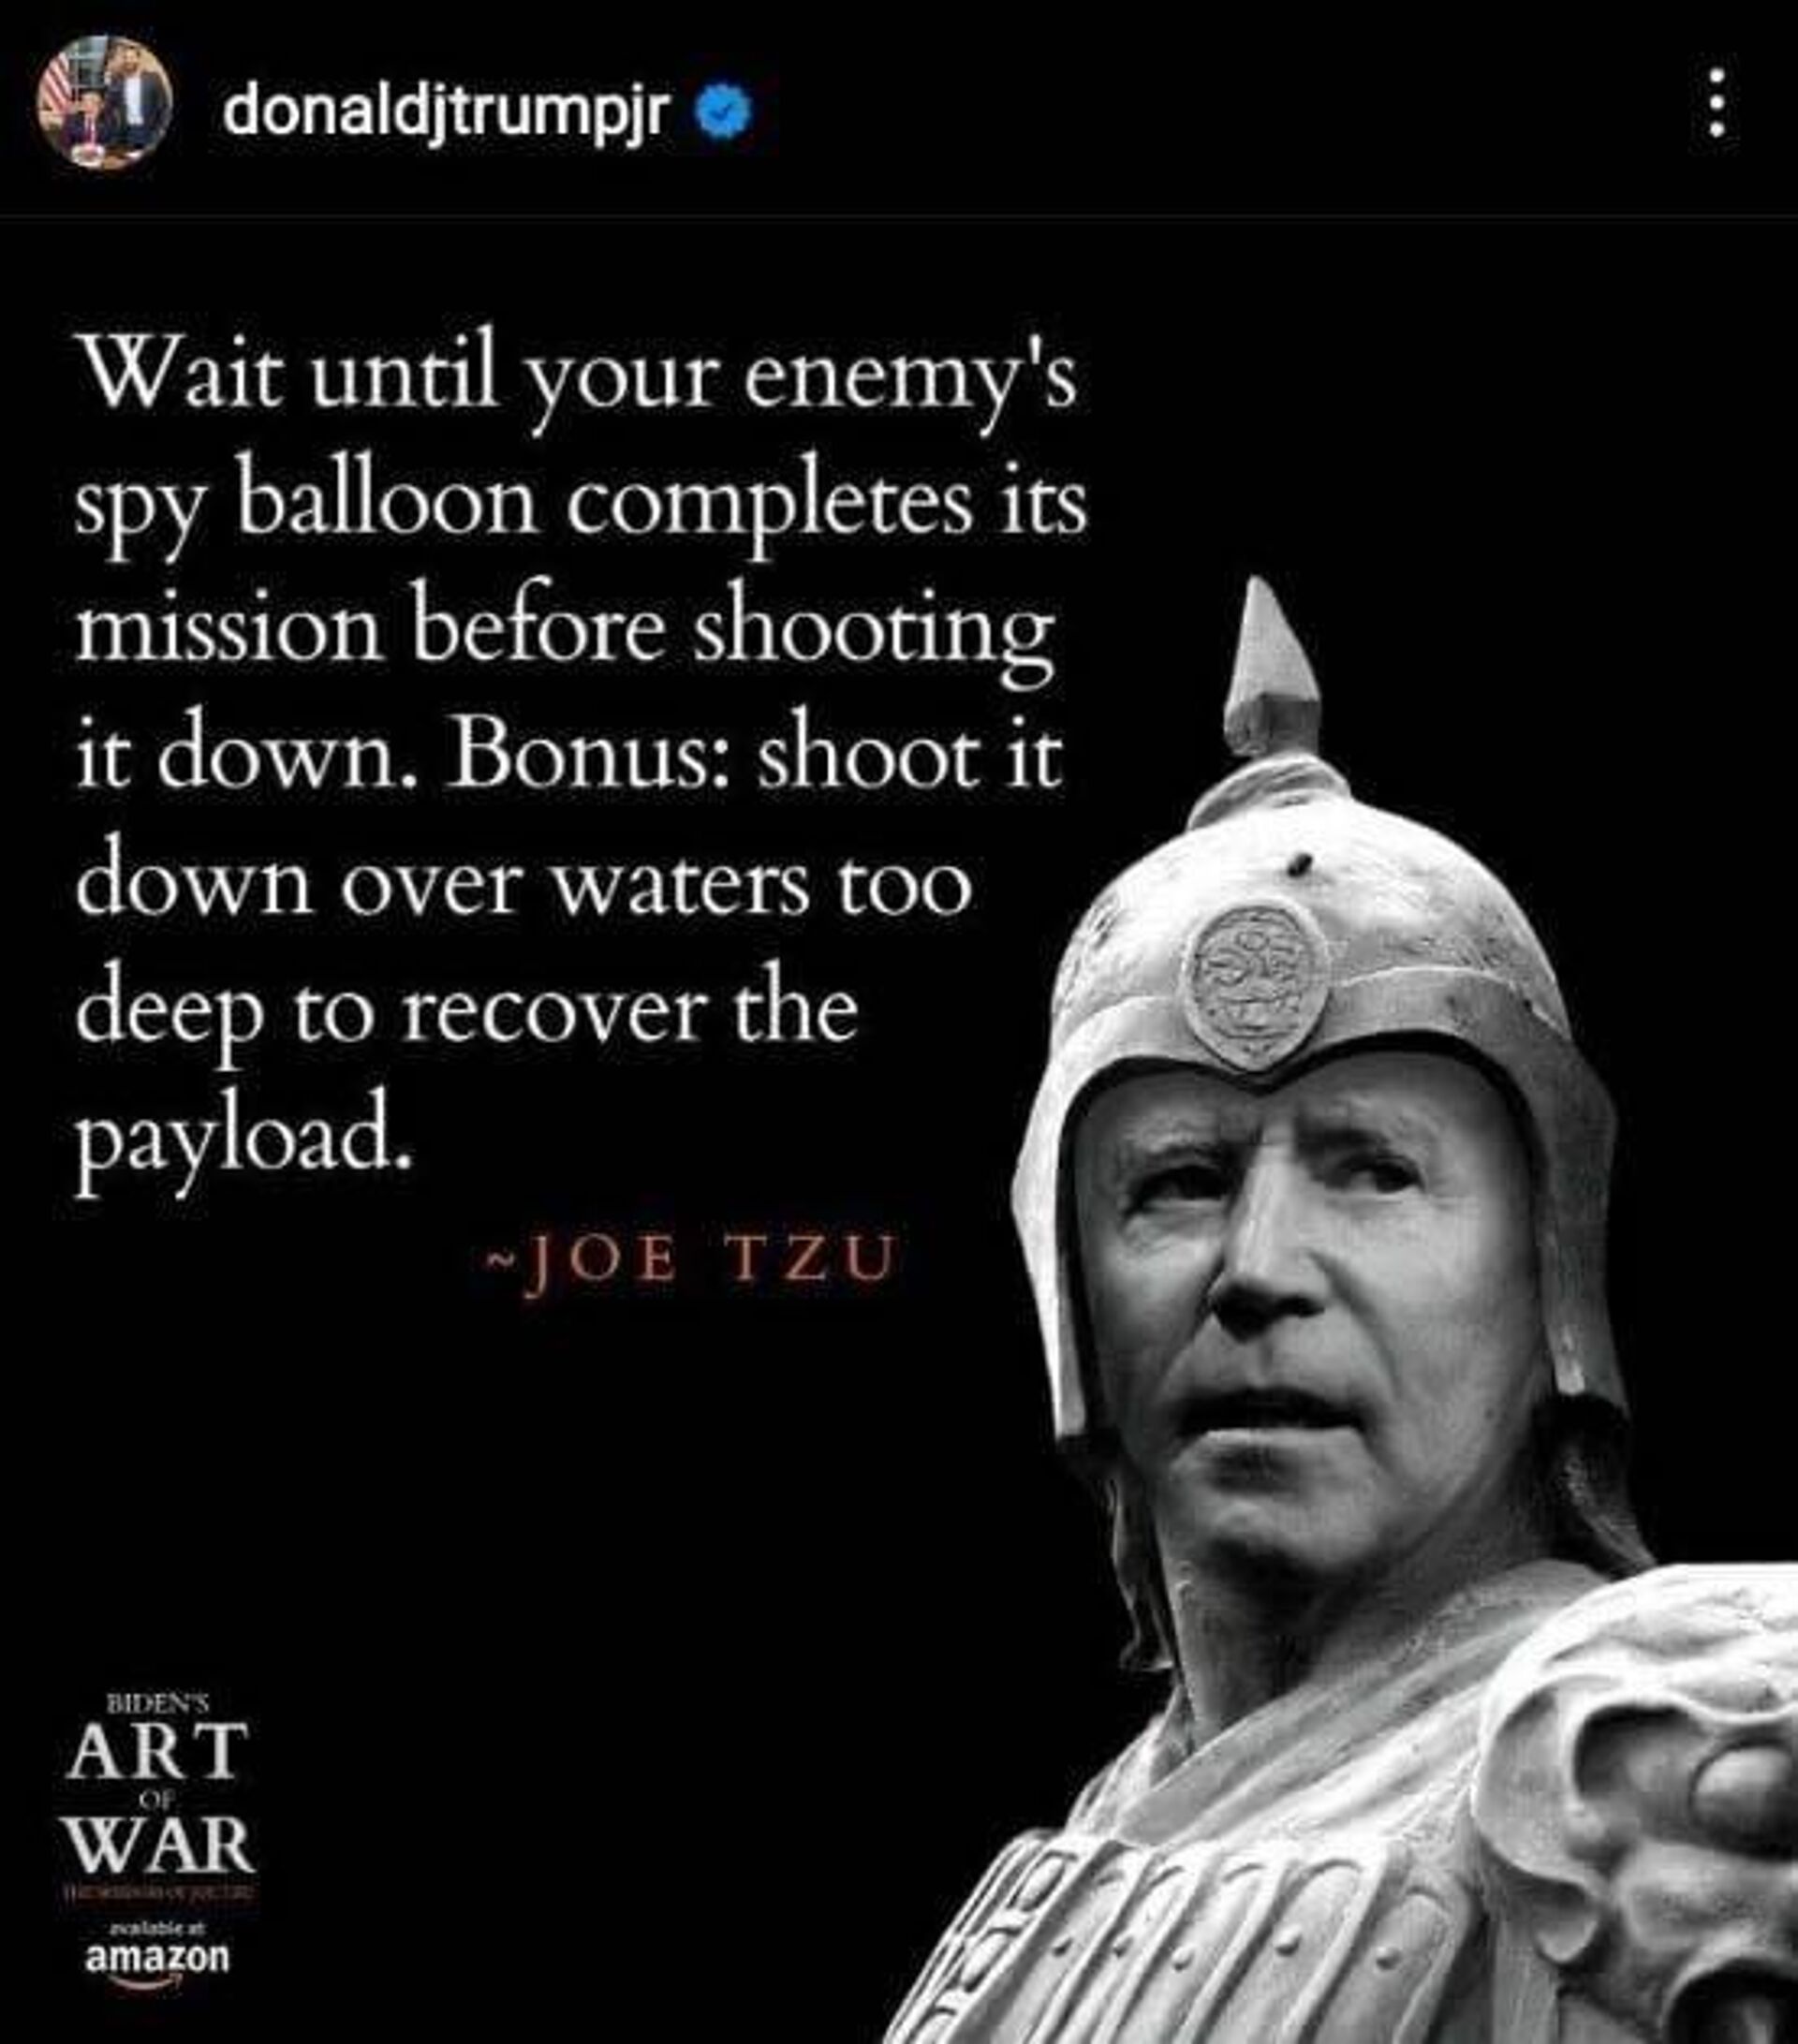 Donald Trump Jr Instagram post mocking President Biden's handling of Chinese balloon incident using the popular 'Joe Tzu' meme. - Sputnik International, 1920, 05.02.2023